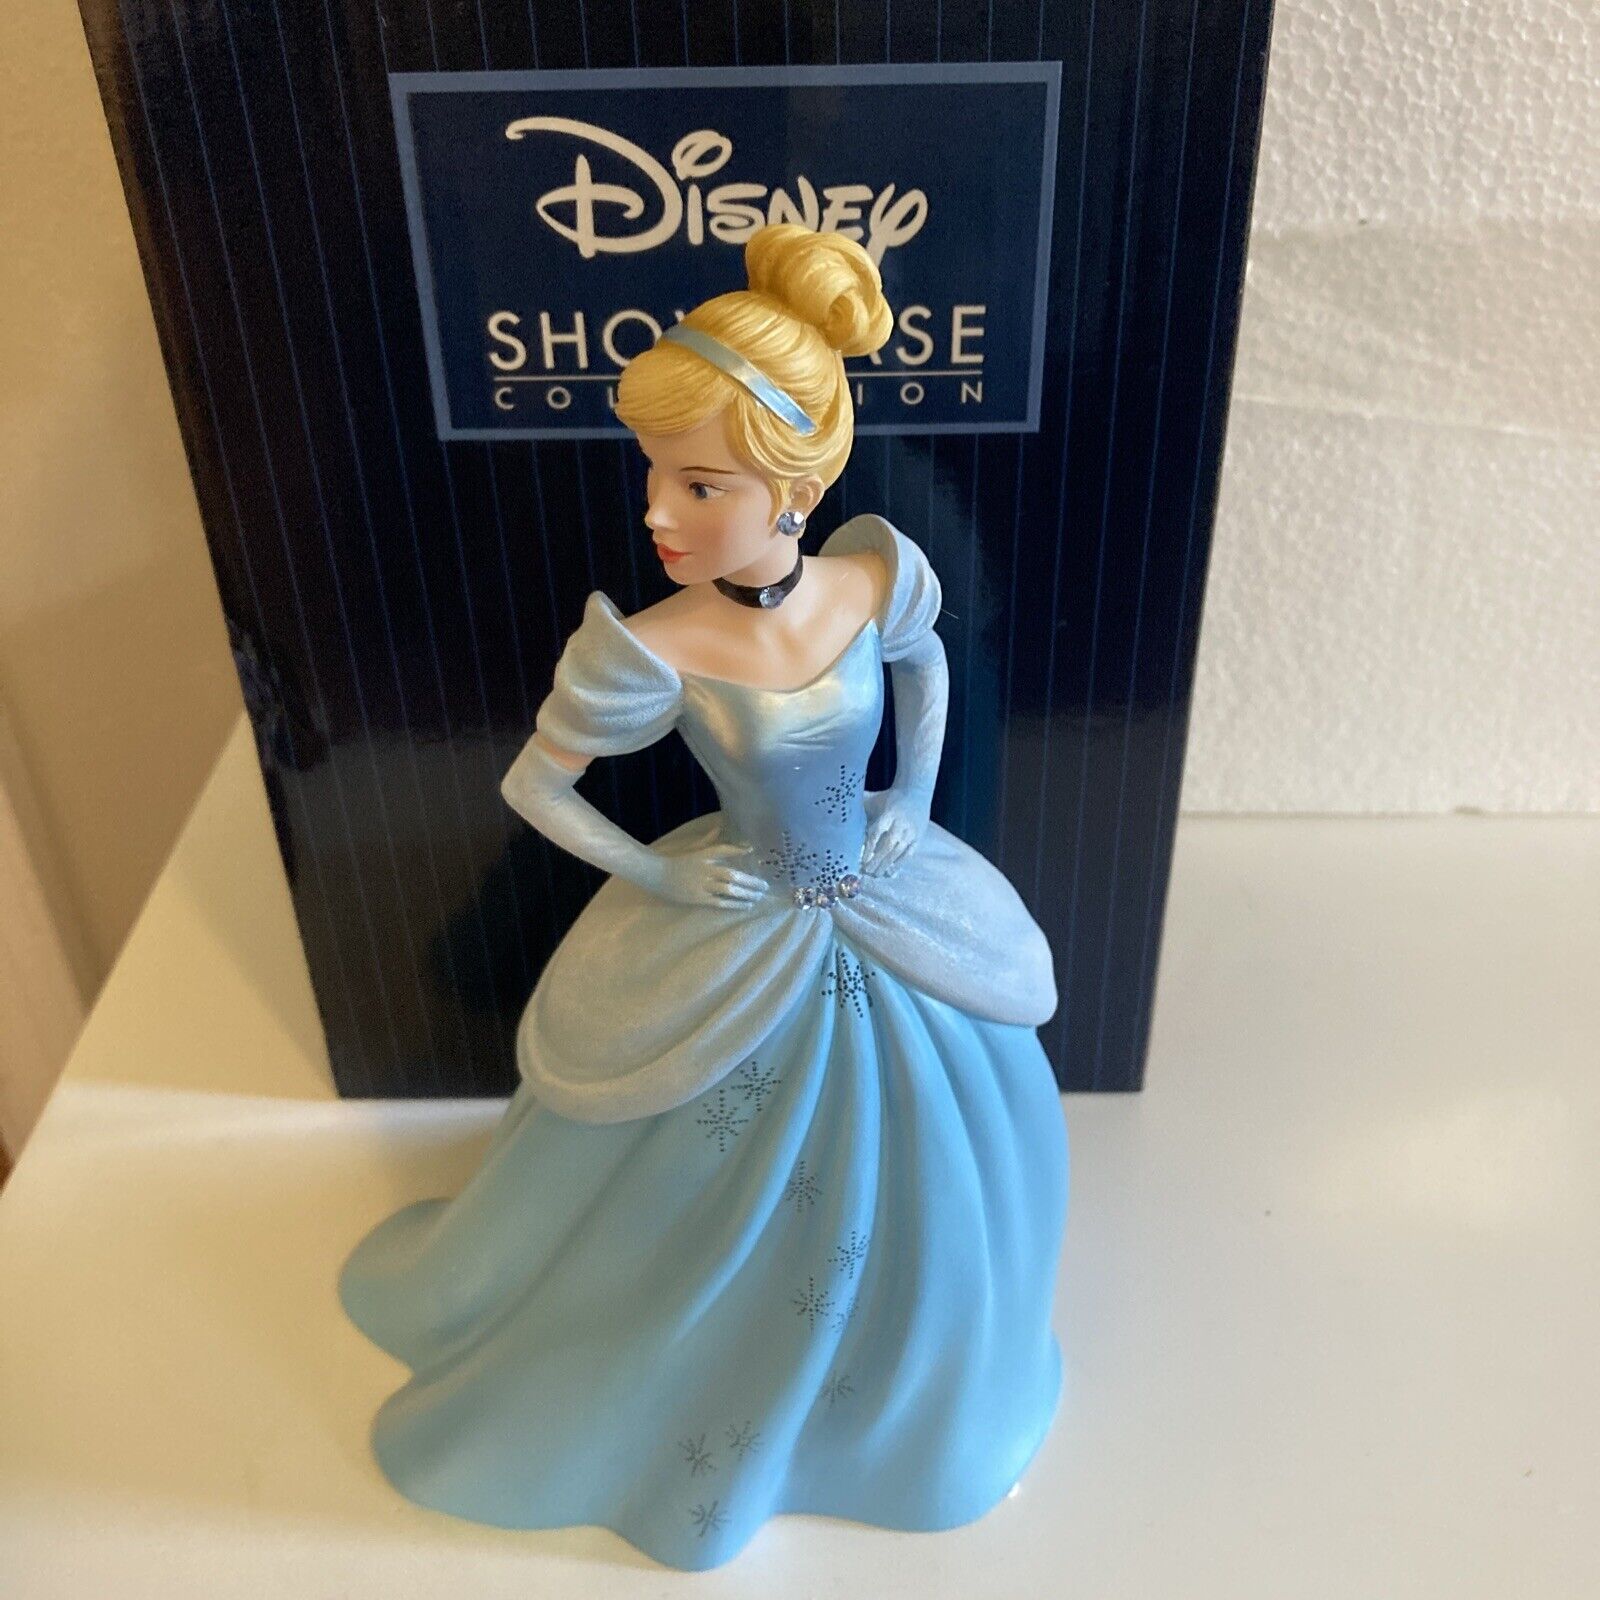 Enesco Disney Showcase Collection Cinderella 6005684 Figurine Blue 03447